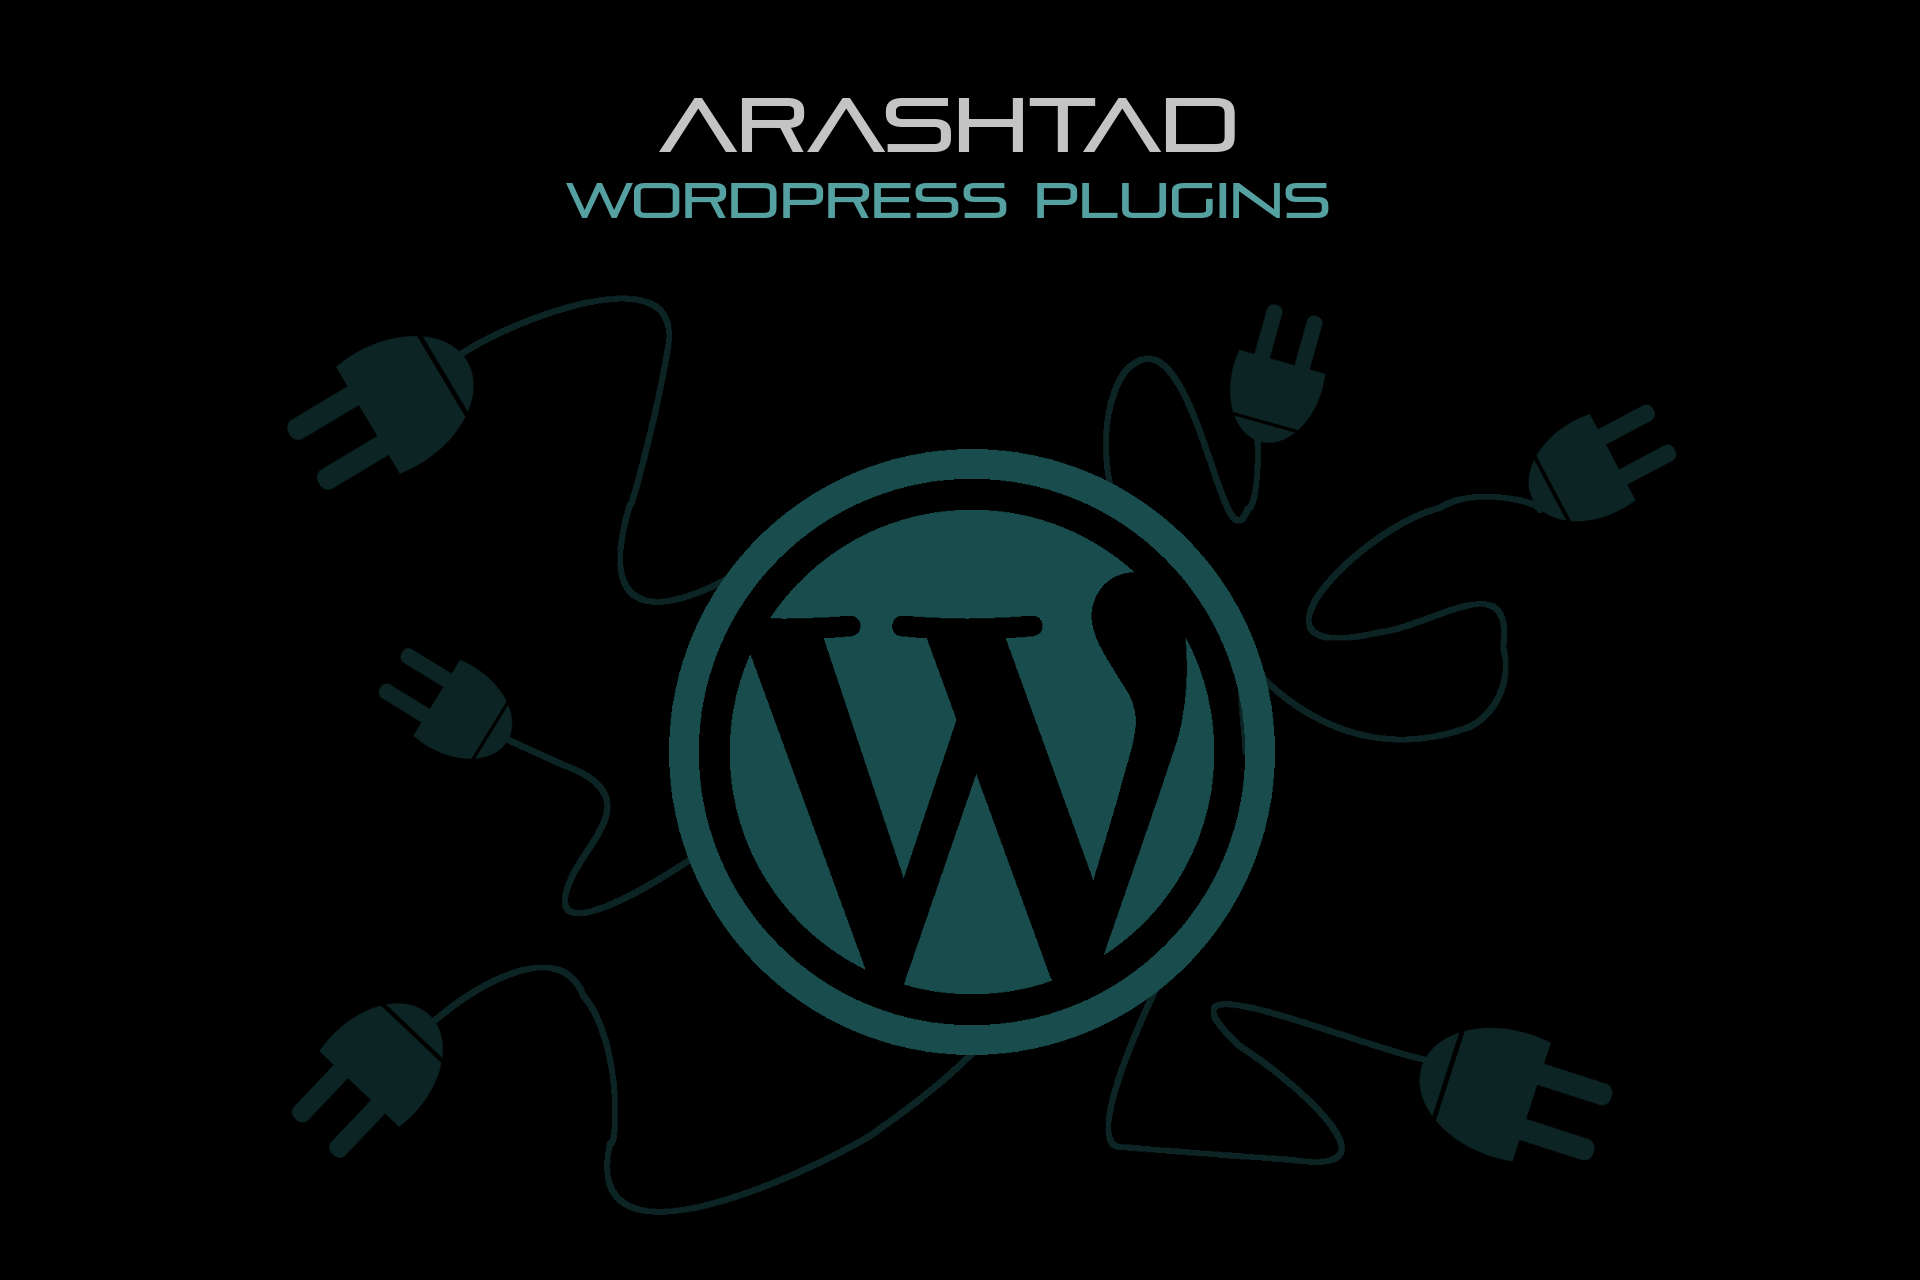 Arashtad WordPress Plugins